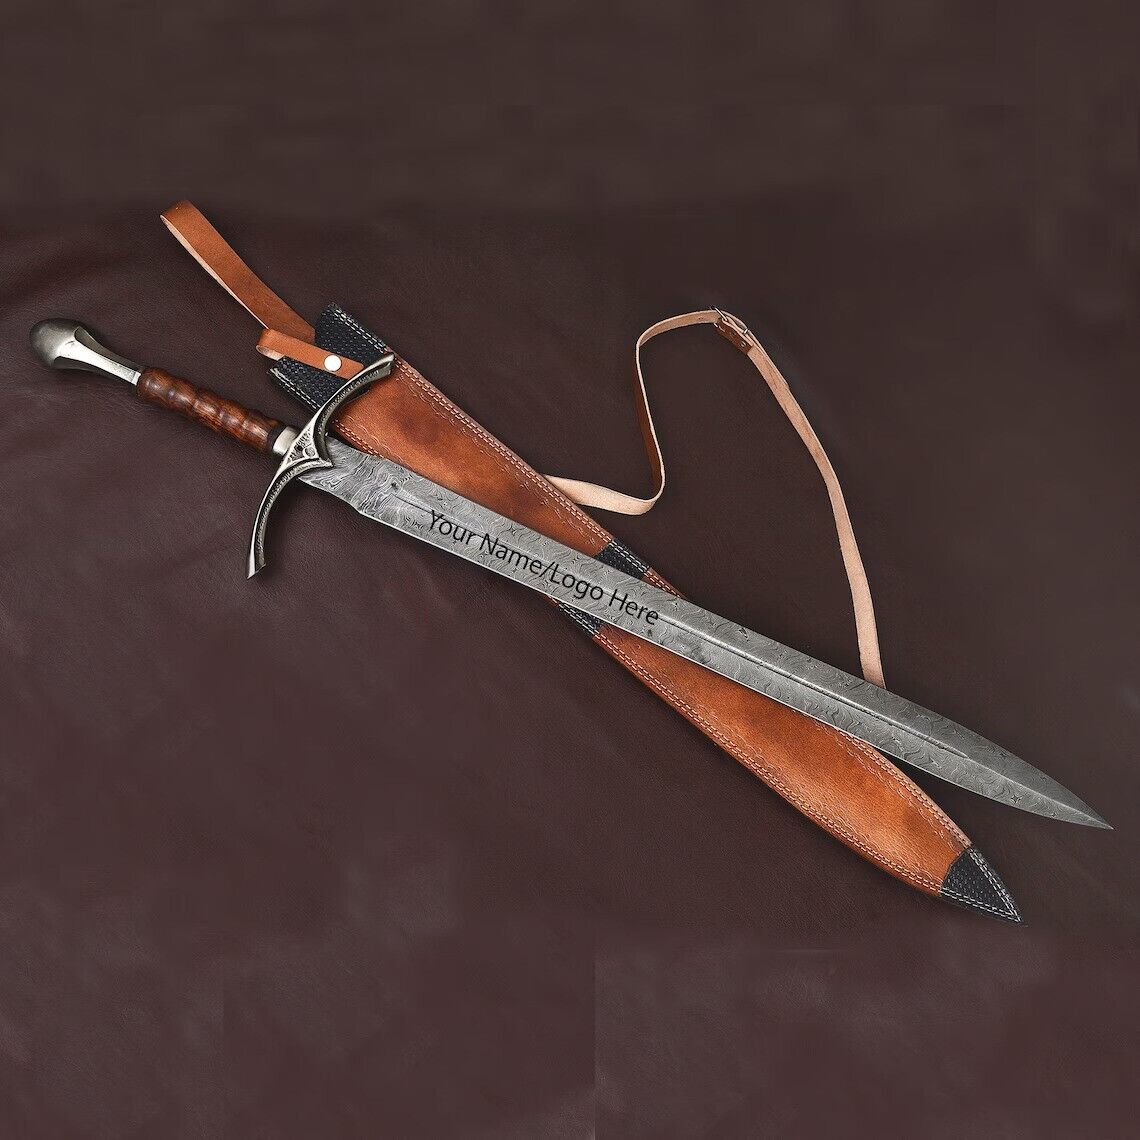 Handmade Damascus Steel Sword with Leader Sheath, Viking Sword, Battle Ready